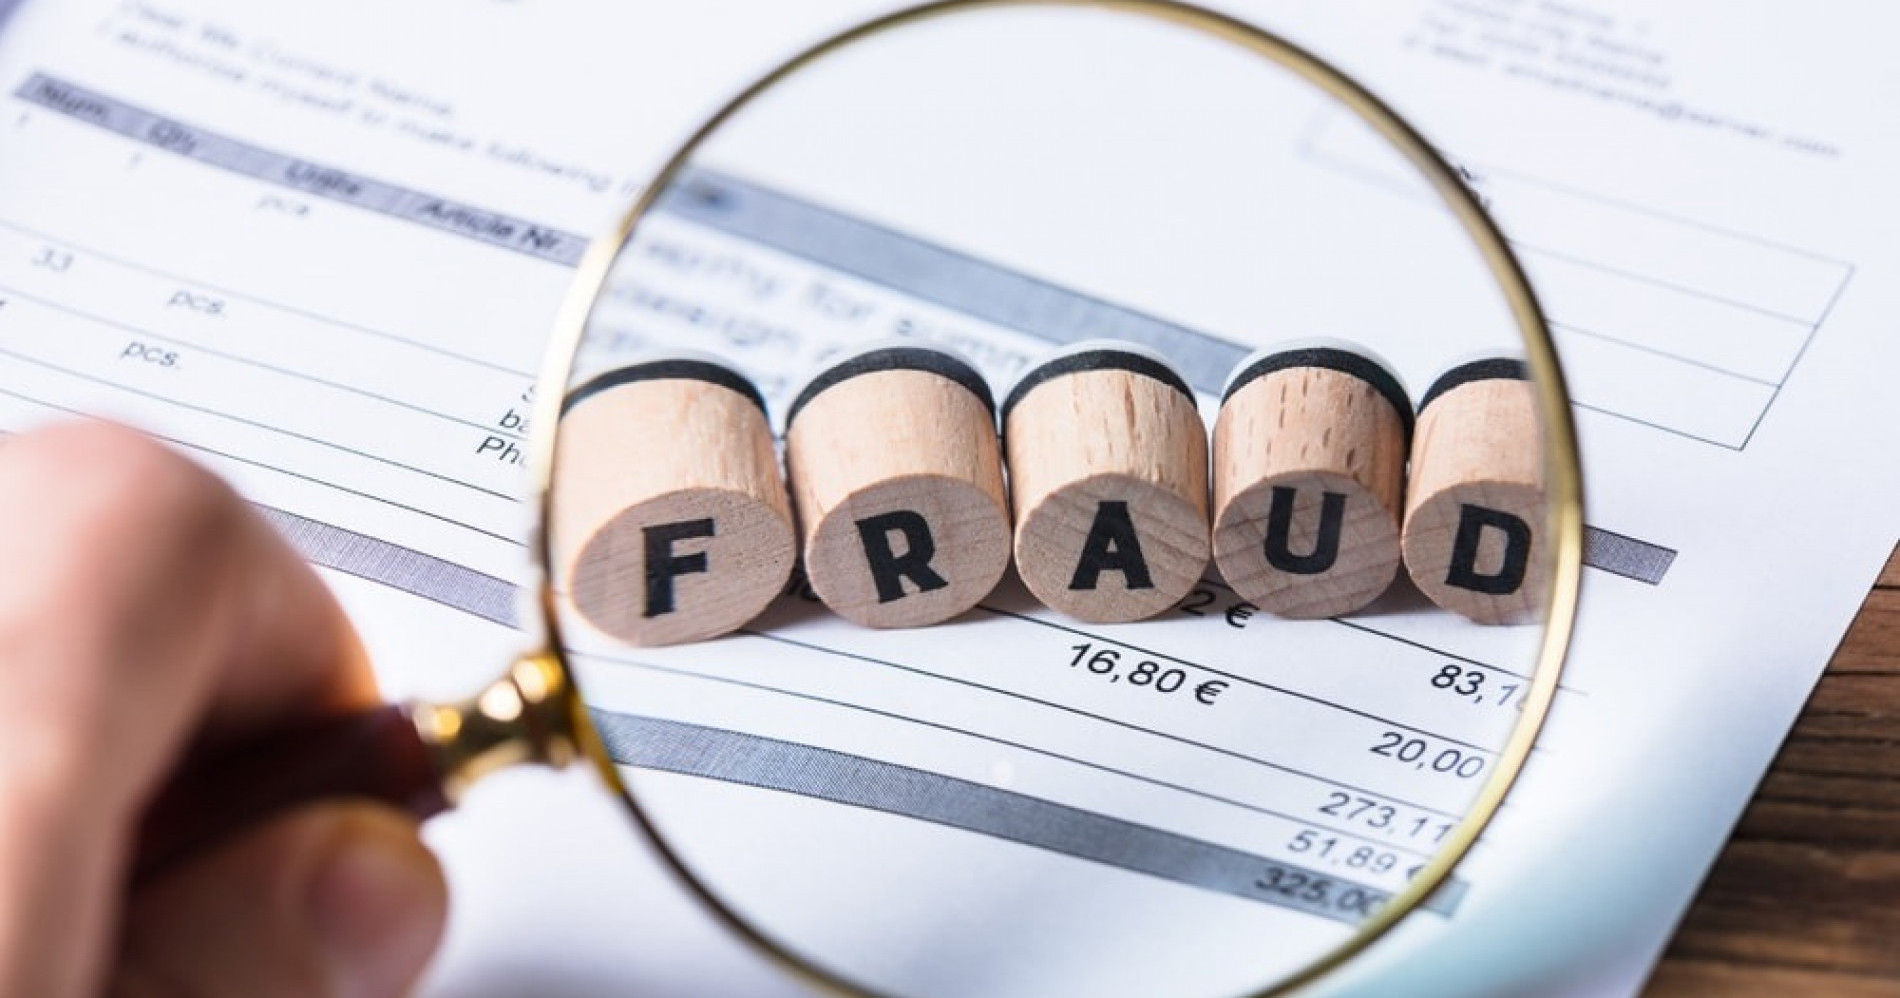 Fraud (Sumber gambar: www.corporatecomplianceinsights.com)